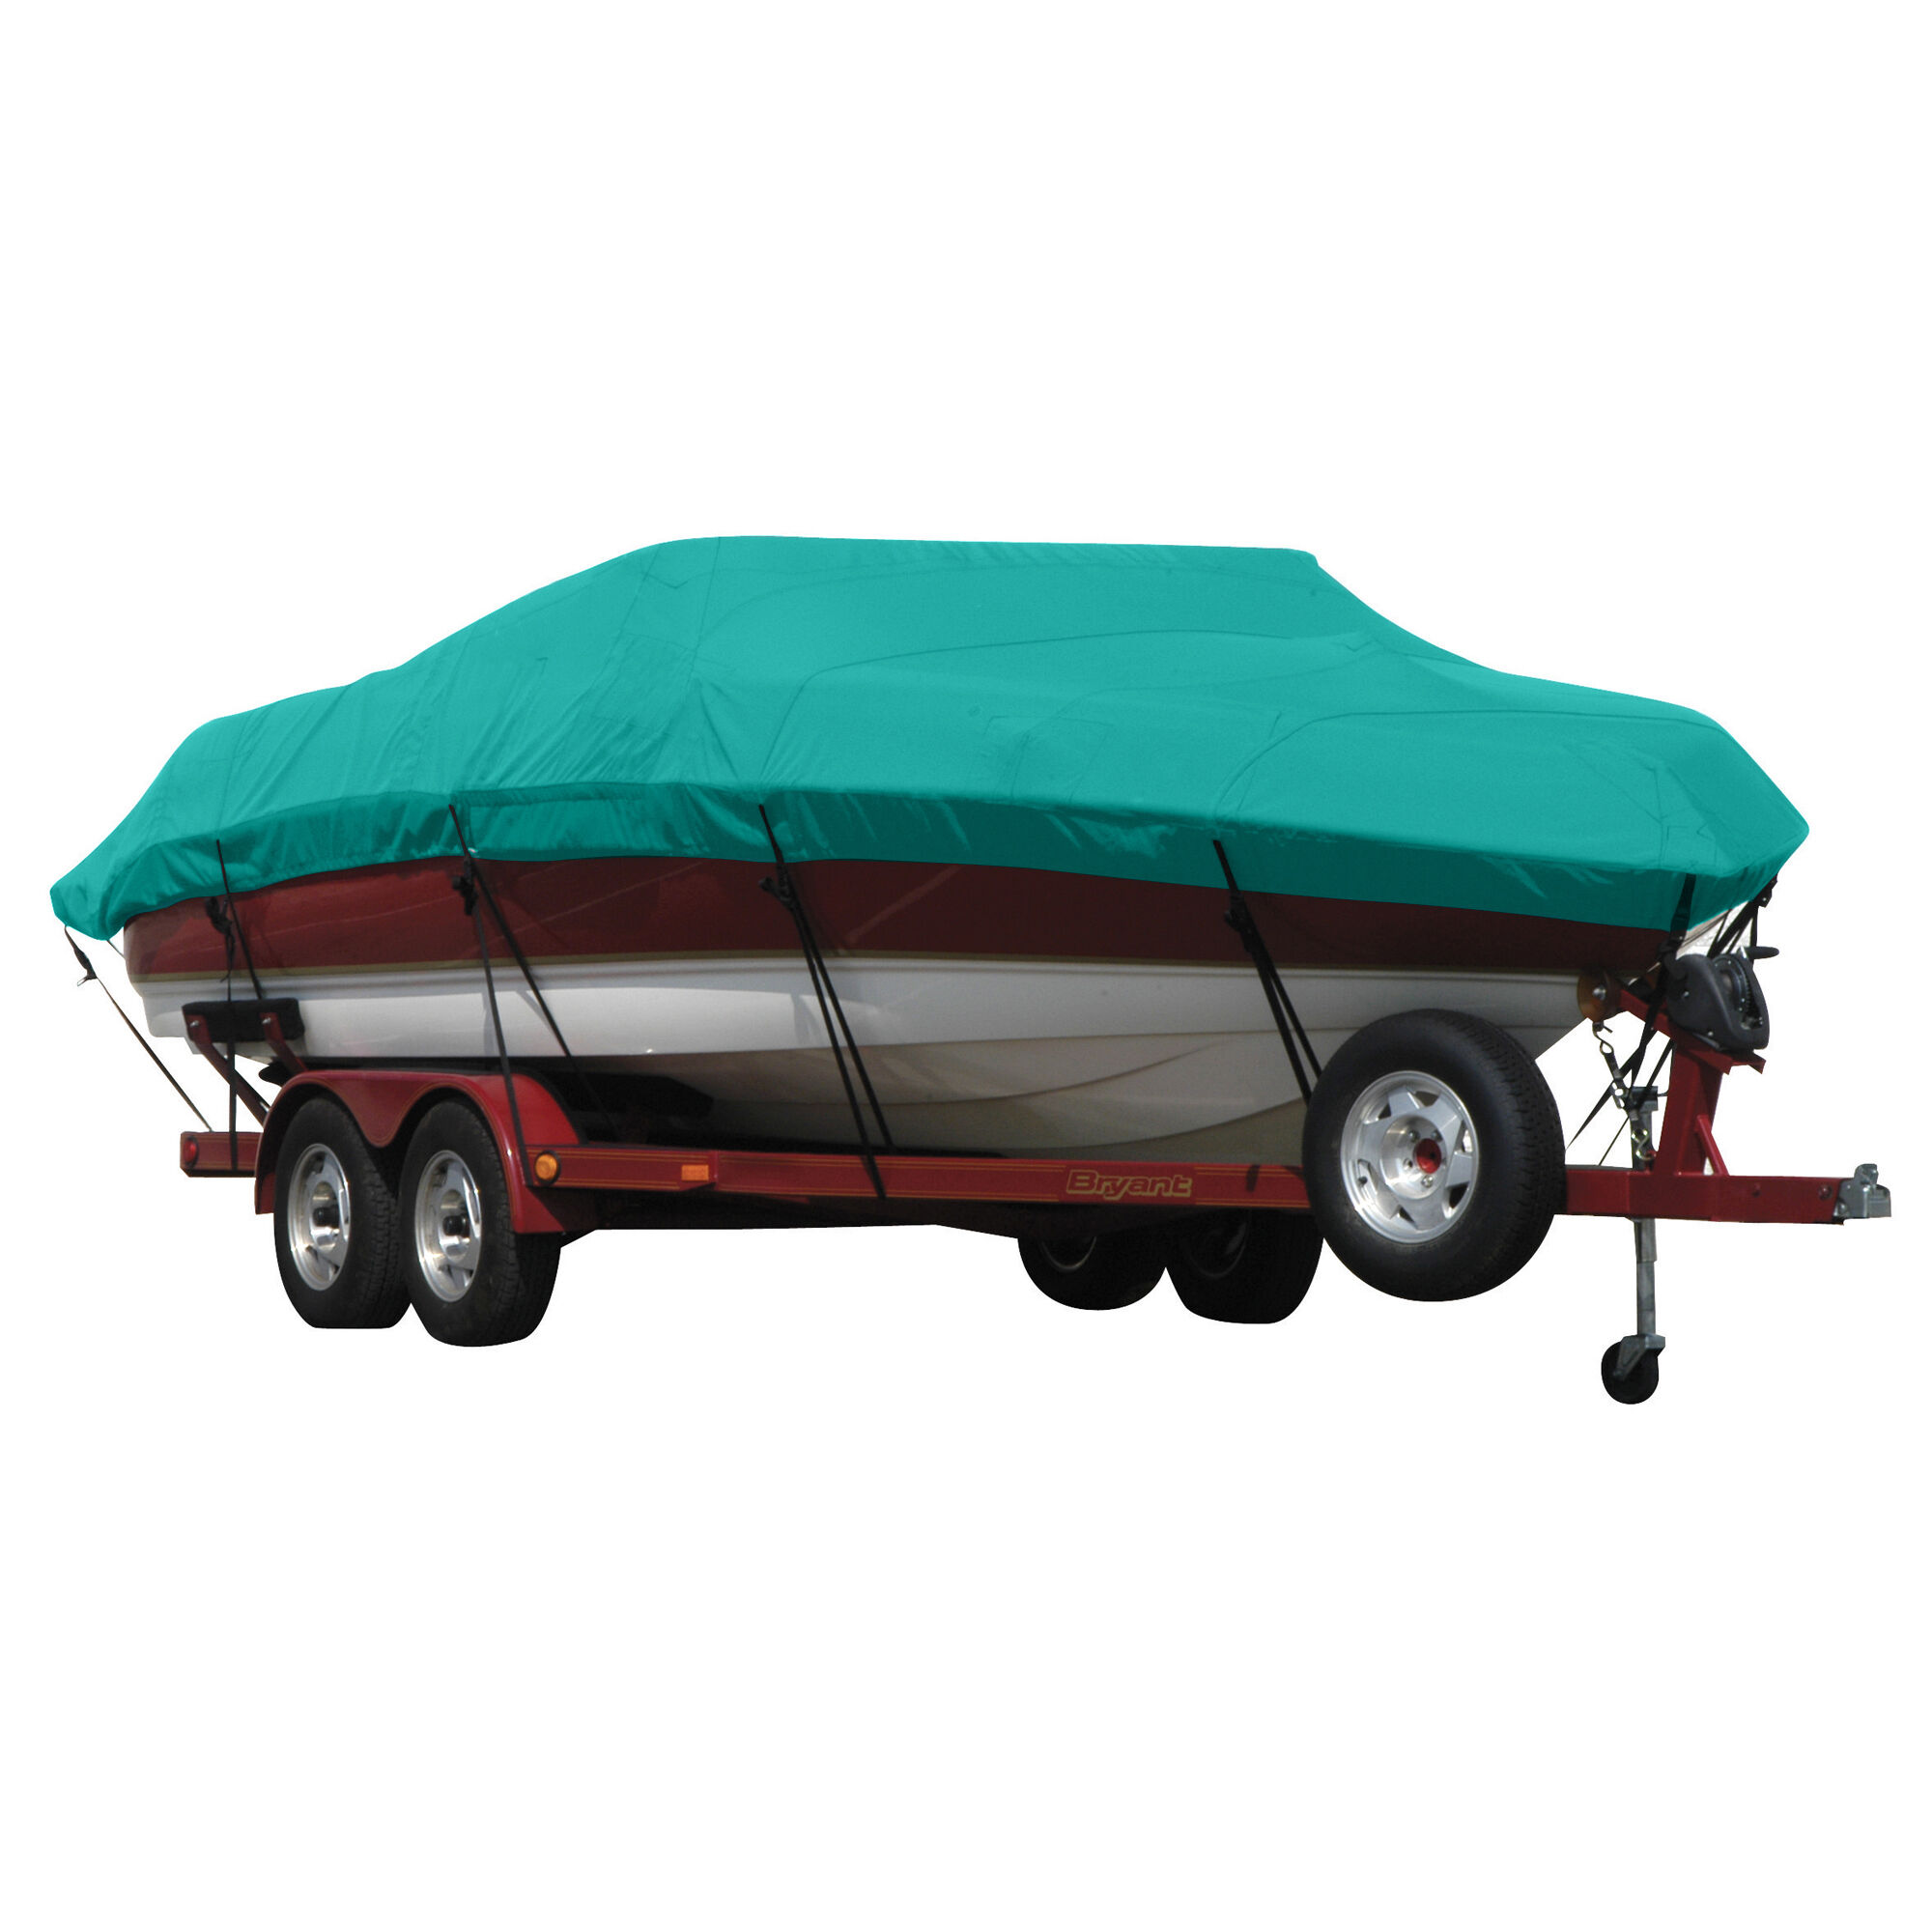 Covermate Exact Fit Sunbrella Boat Cover for Procraft Pro 205 Pro 205 Side Console w/ Shield w/ Port Trolling Motor O/B. Persian Green